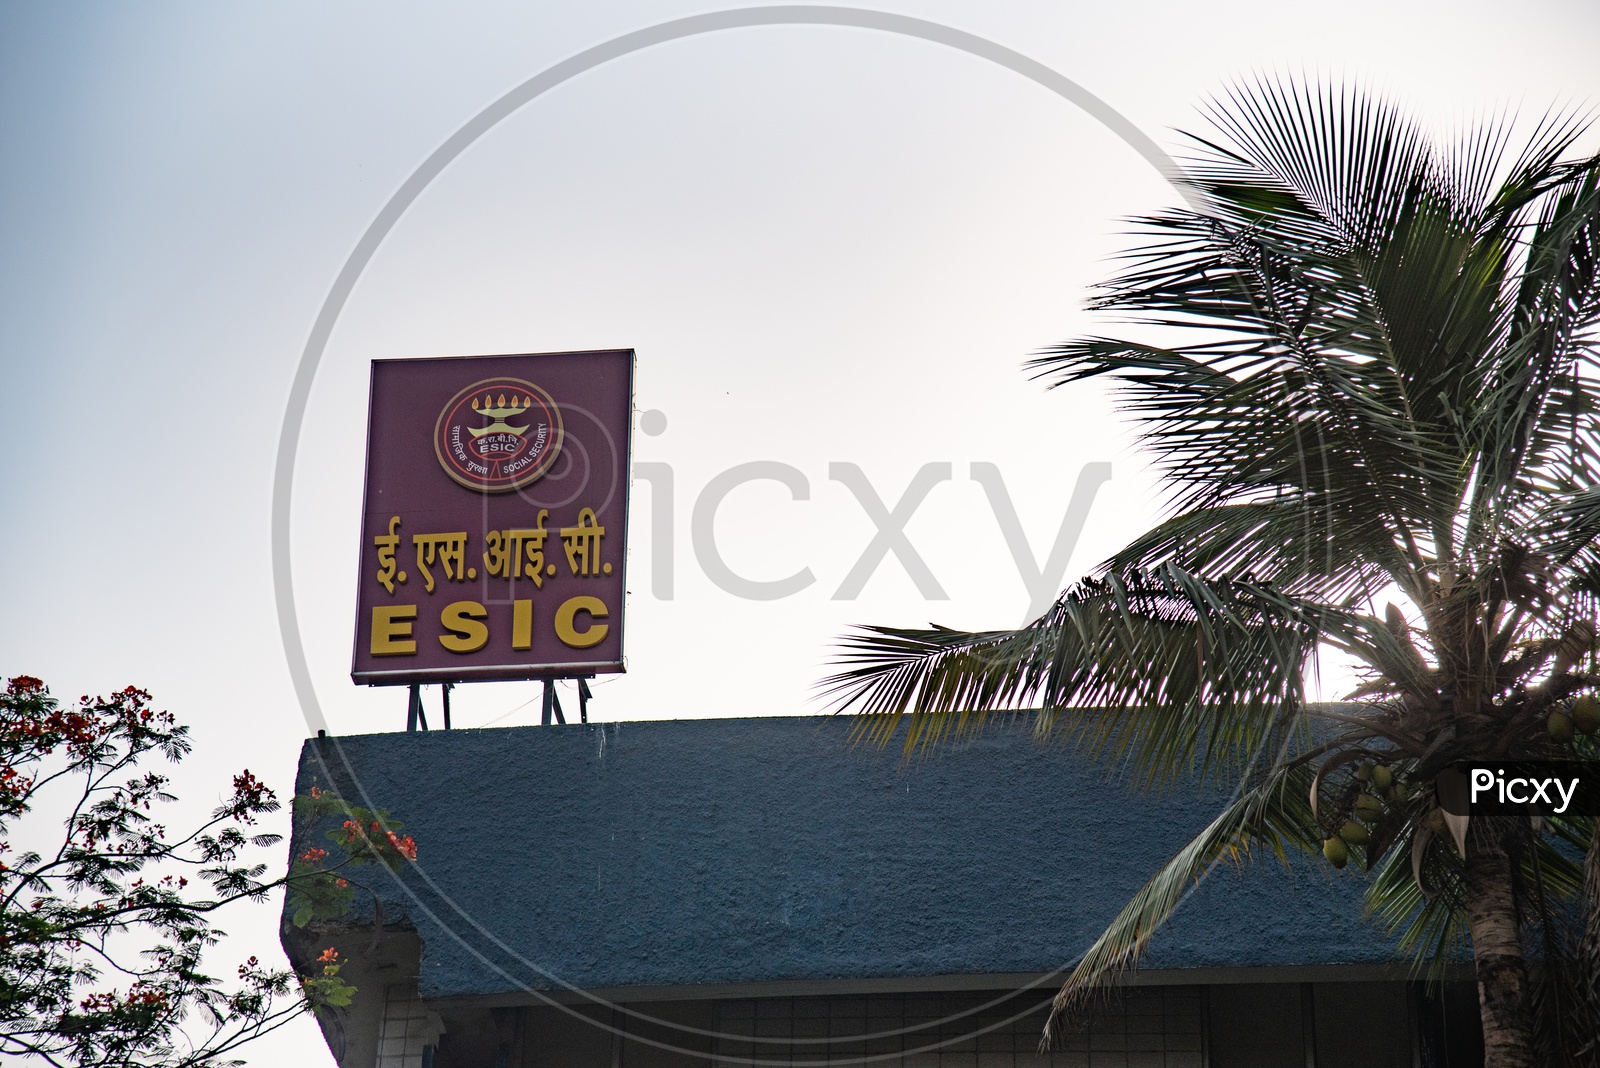 Employees State Insurance Corporation  regional Office  ( ESIC )  , Patna